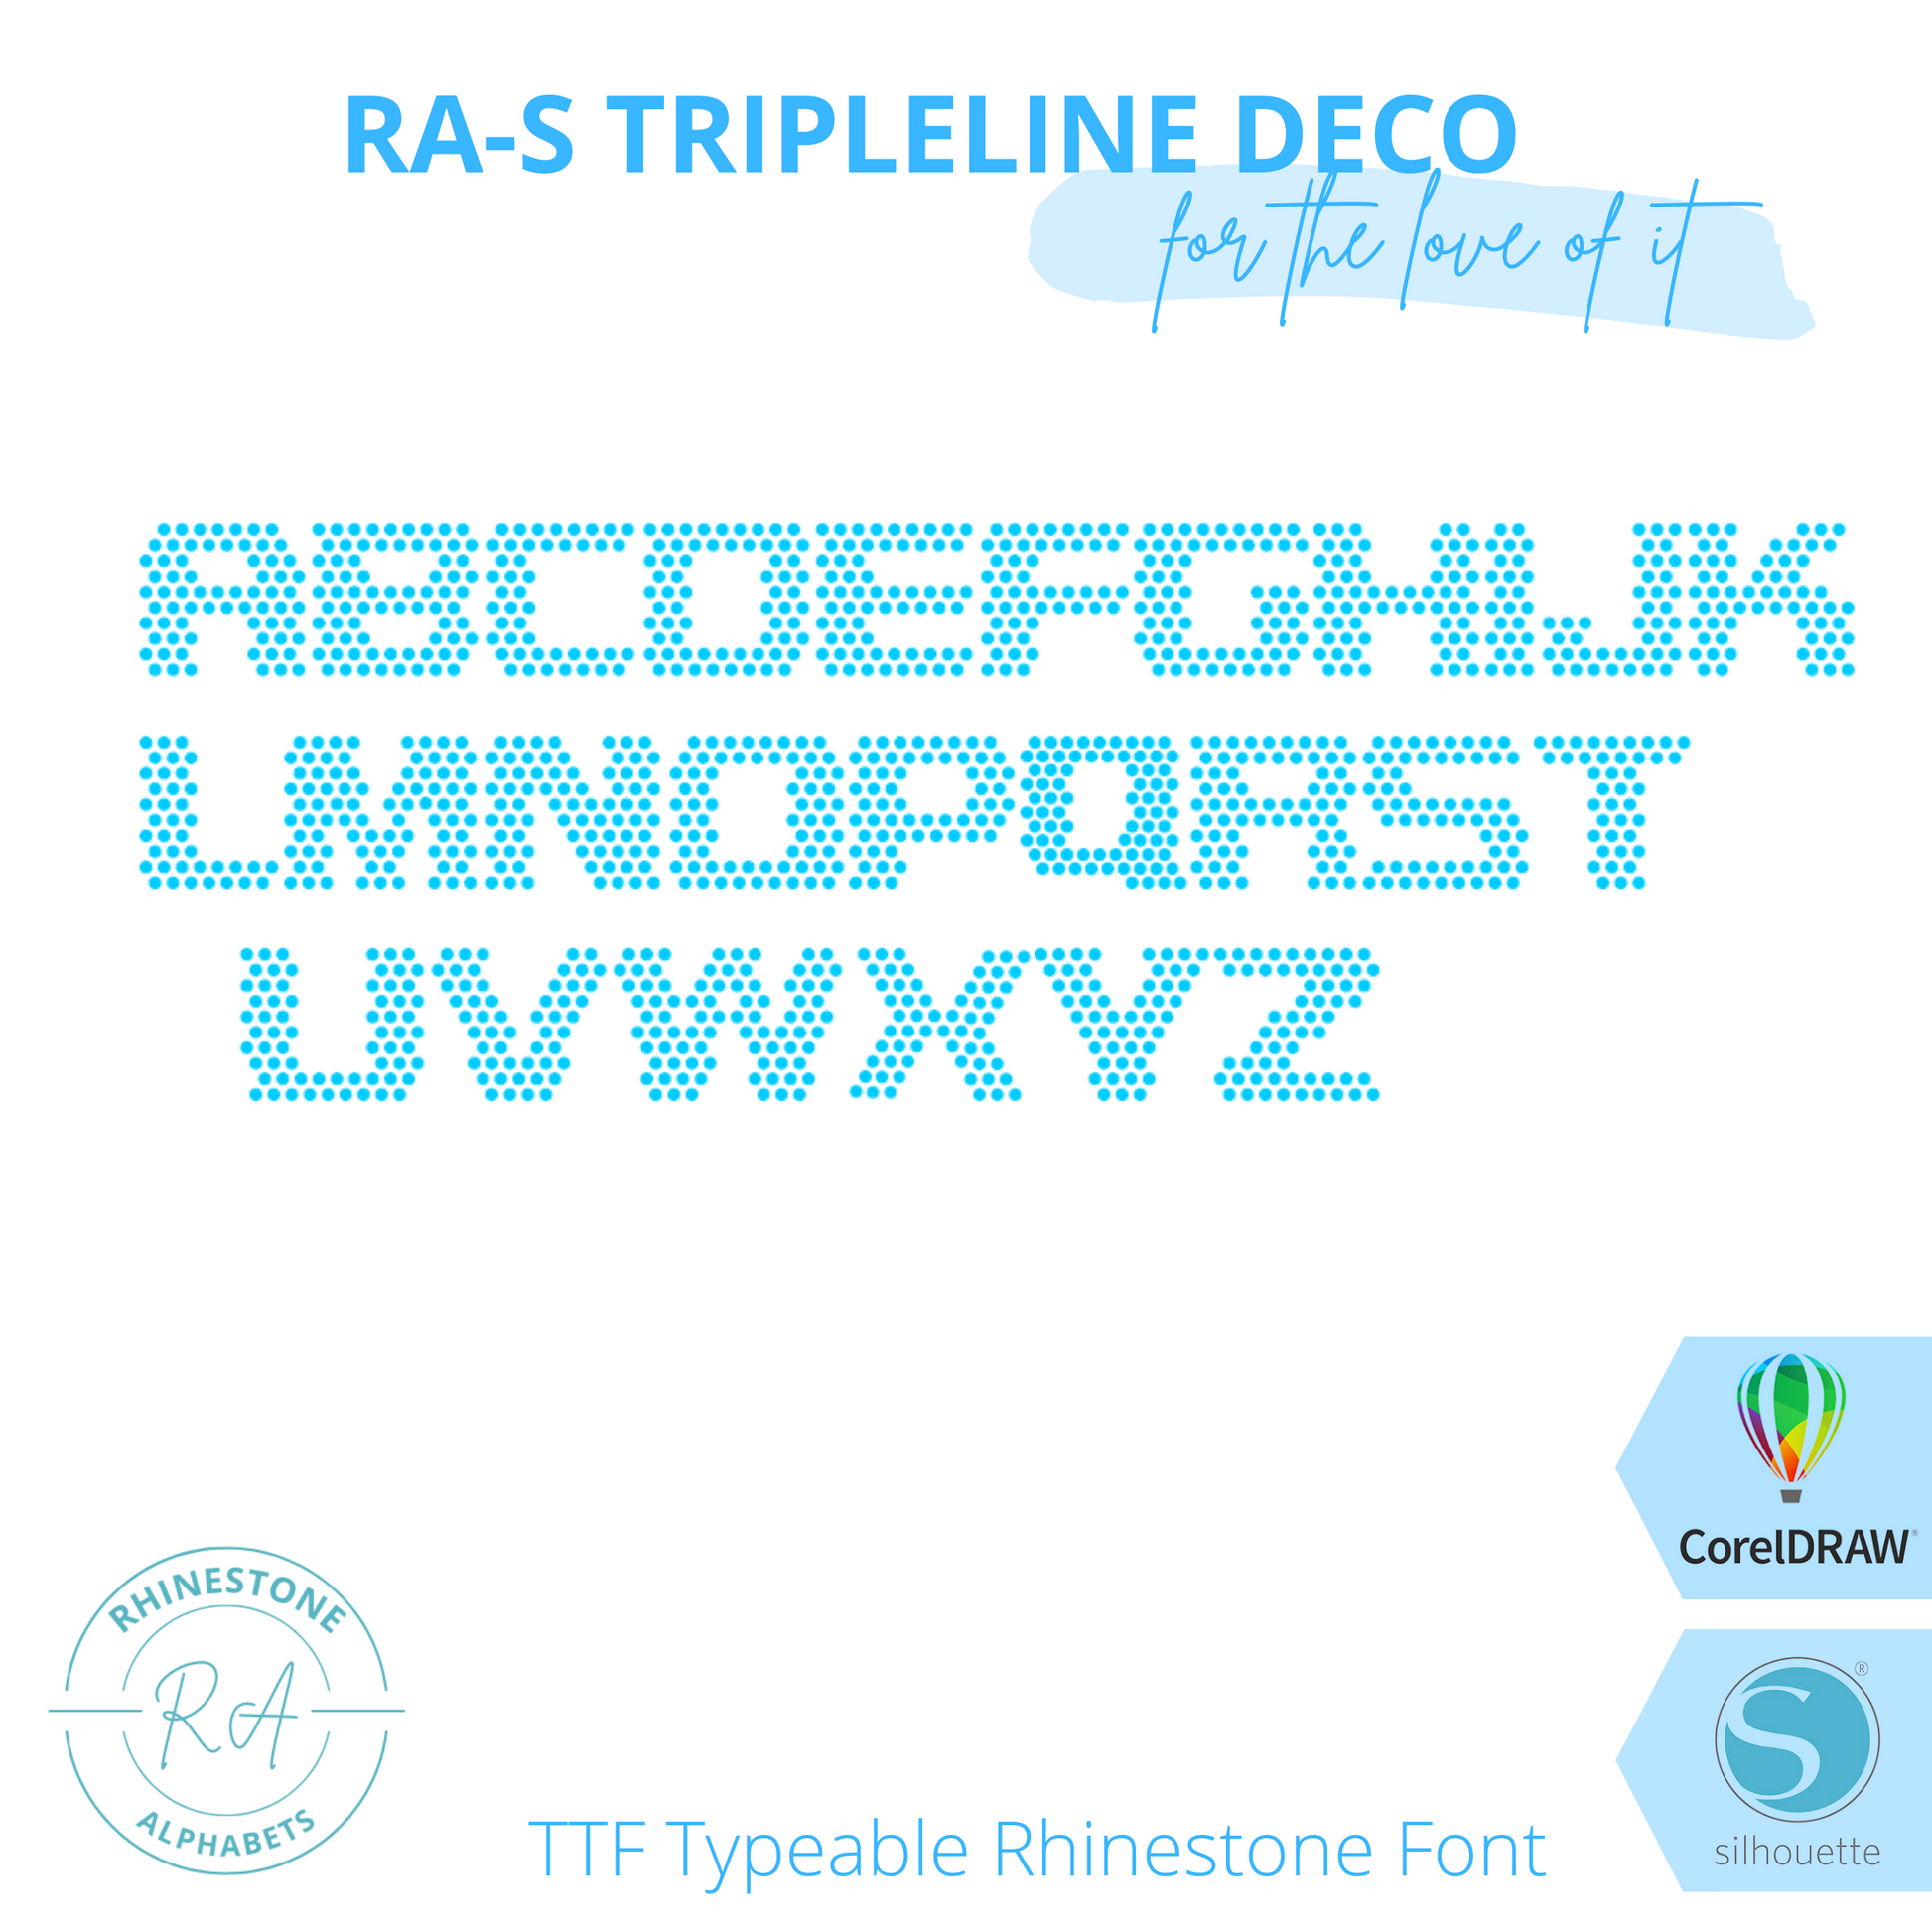 RA-S Triple Line Deco - RhinestoneAlphabets